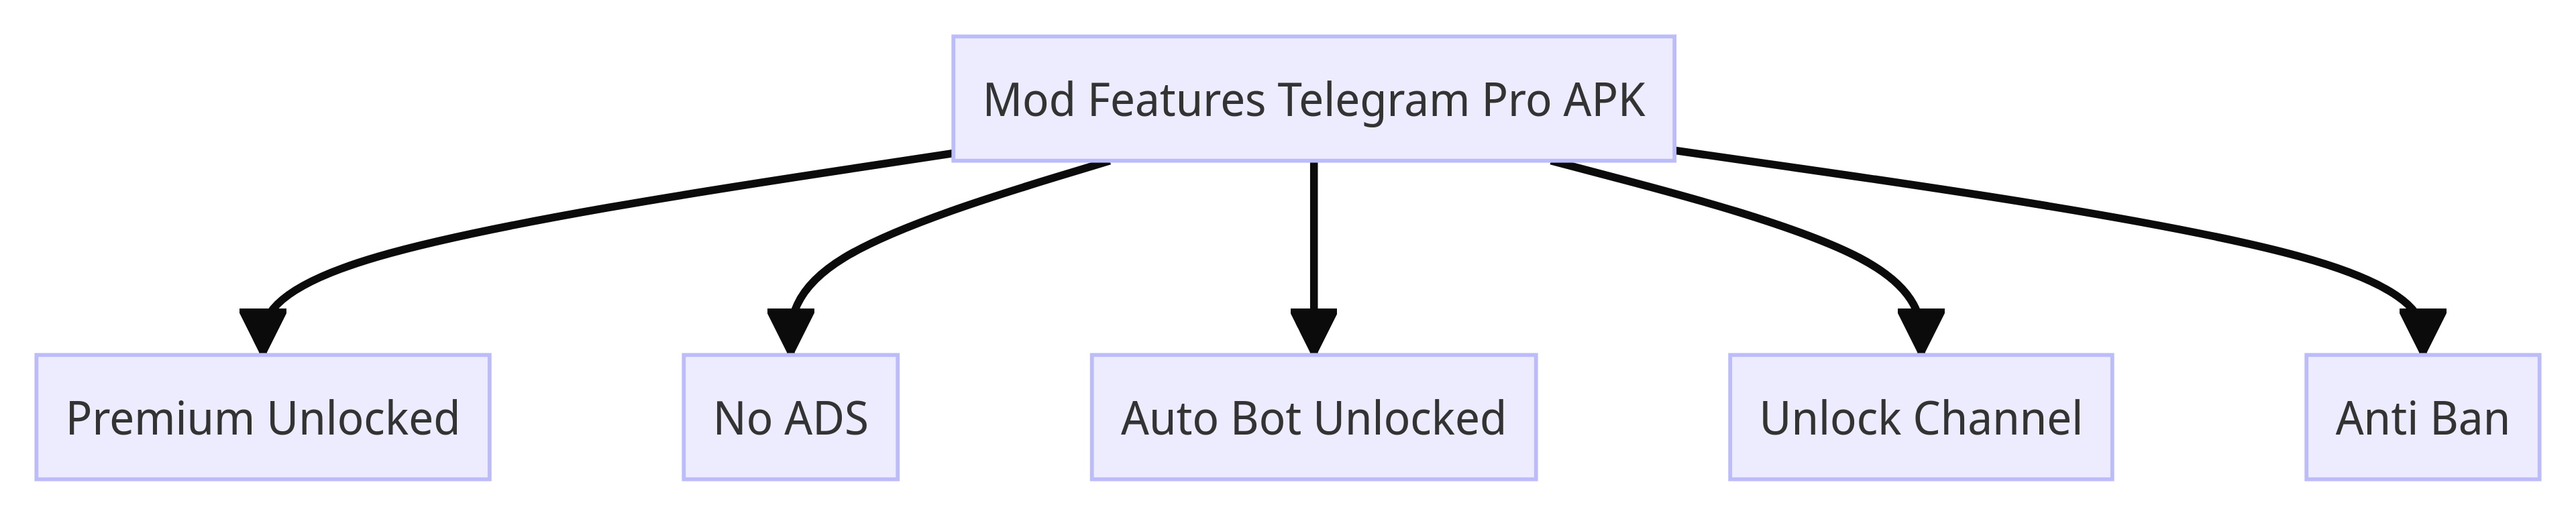 Mod Features Telegram Pro APK